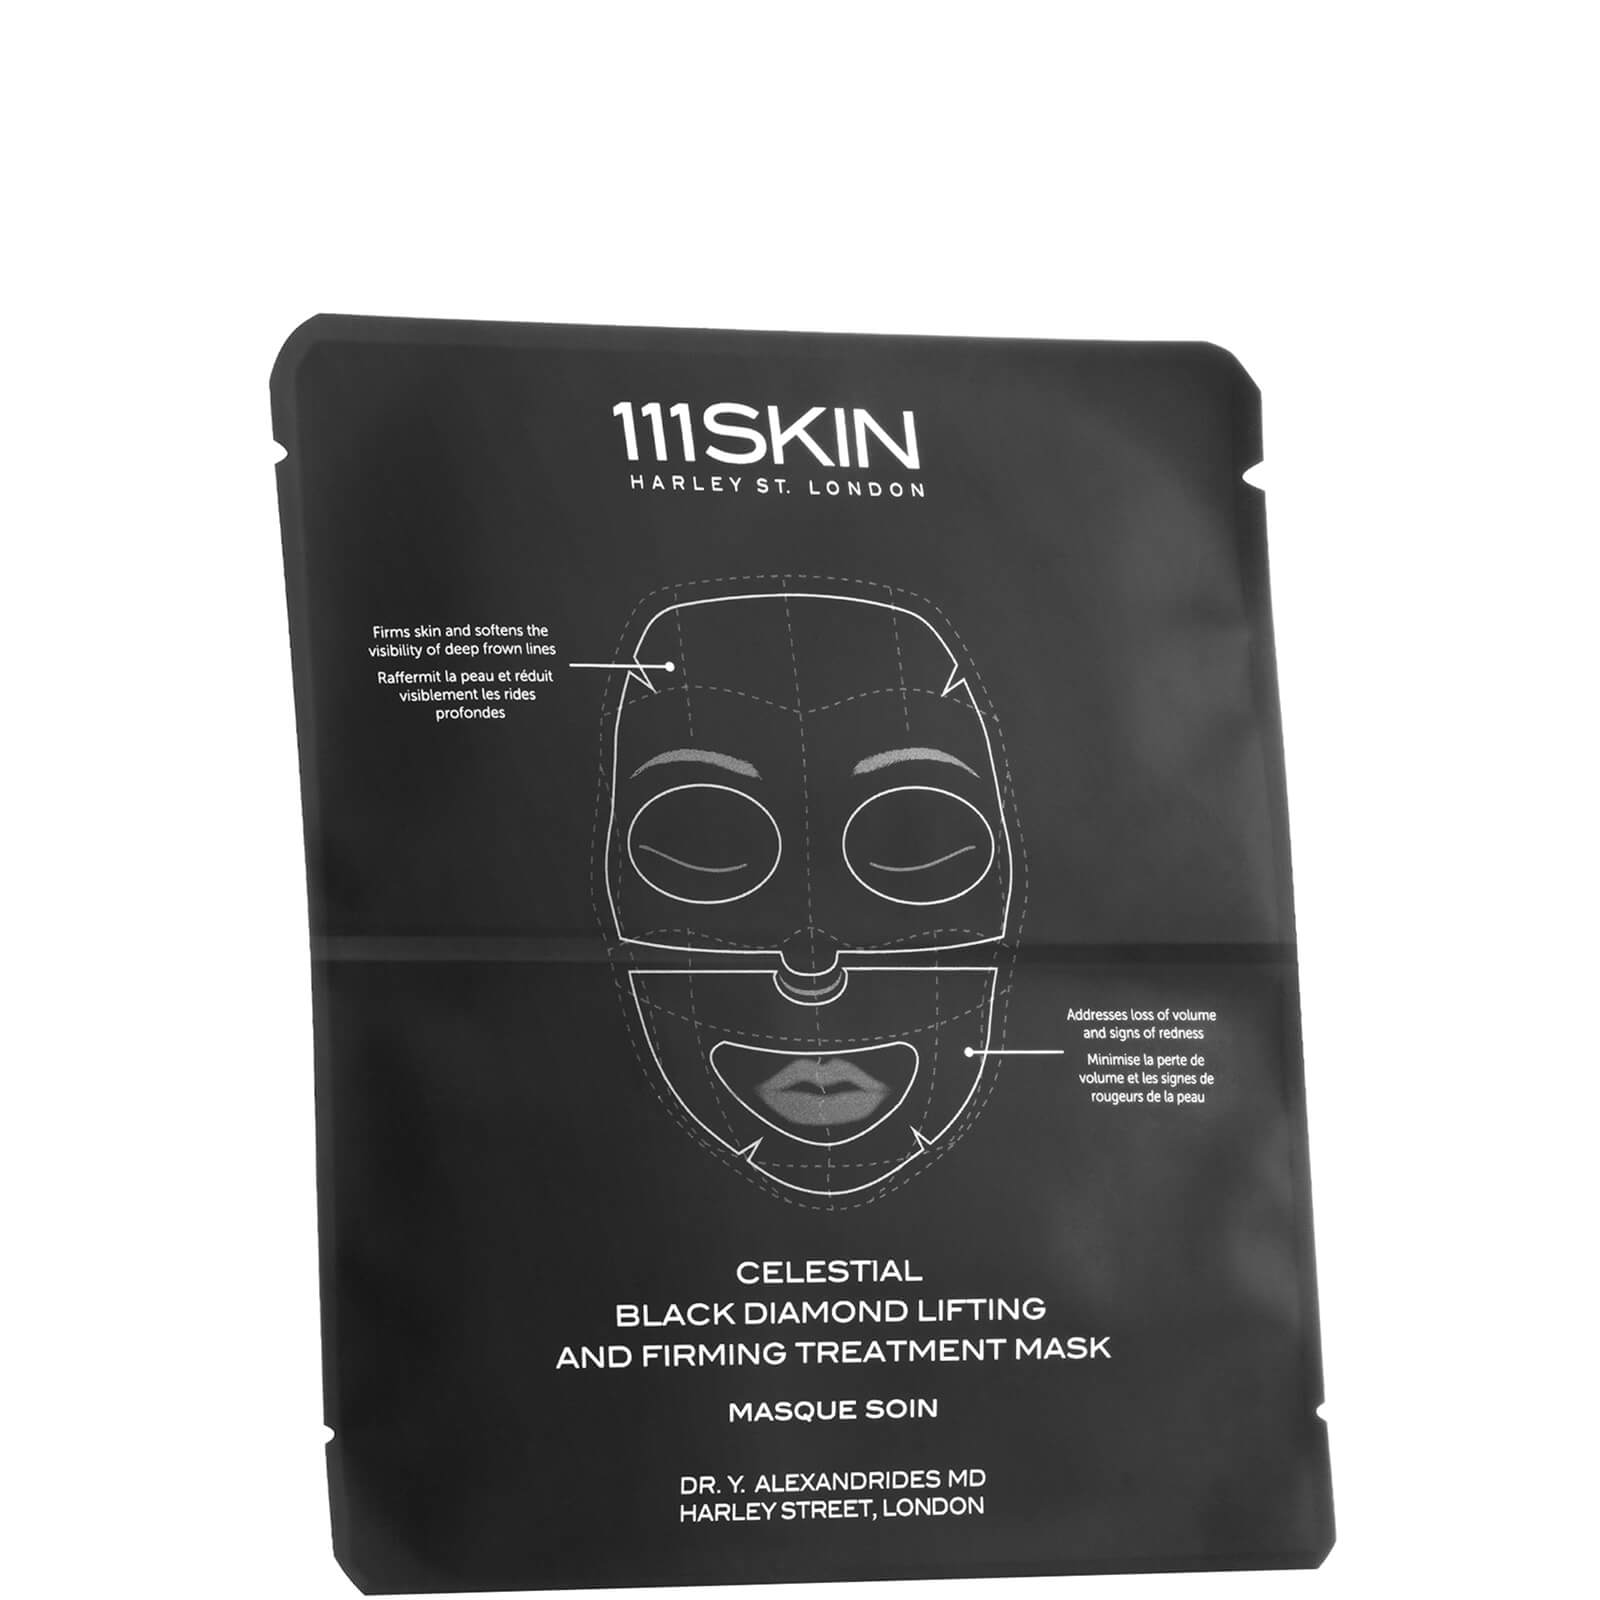 111Skin Celestial Black Diamond Lifting And Firming Treatment Mask - 1.04Oz Acne & Blemish Treatment